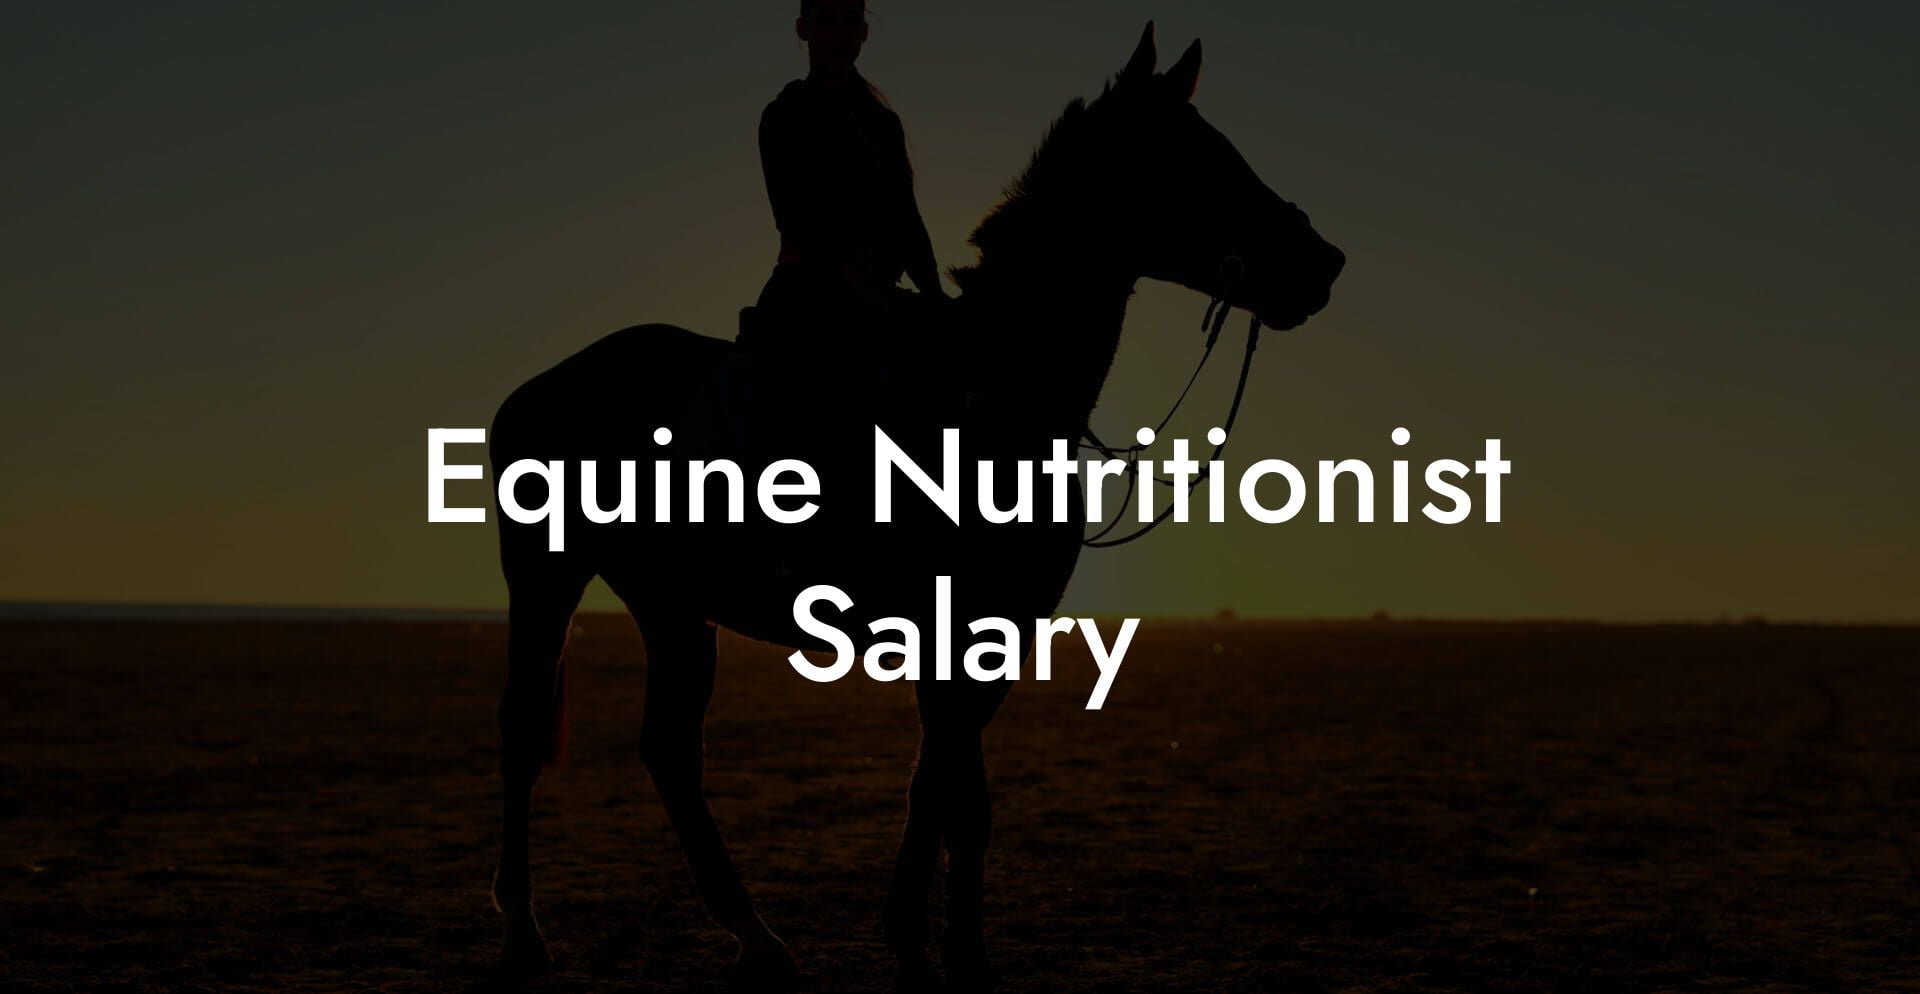 Equine Nutritionist Salary